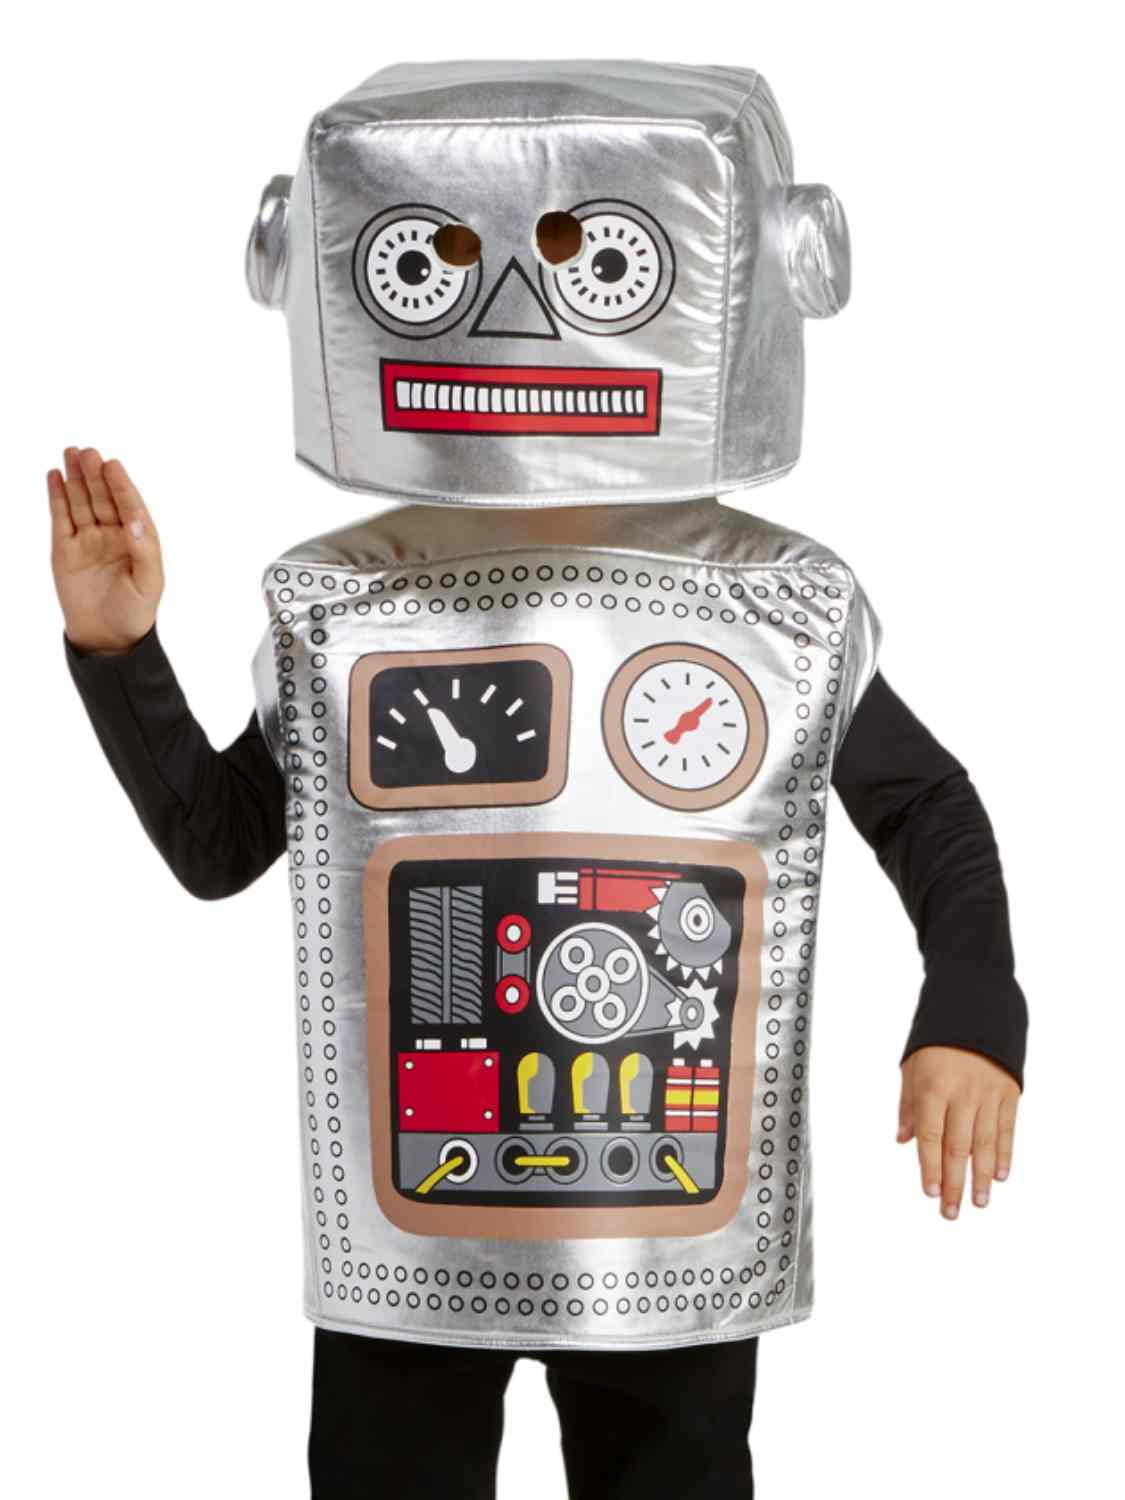 Child Classic Robot Halloween Costume